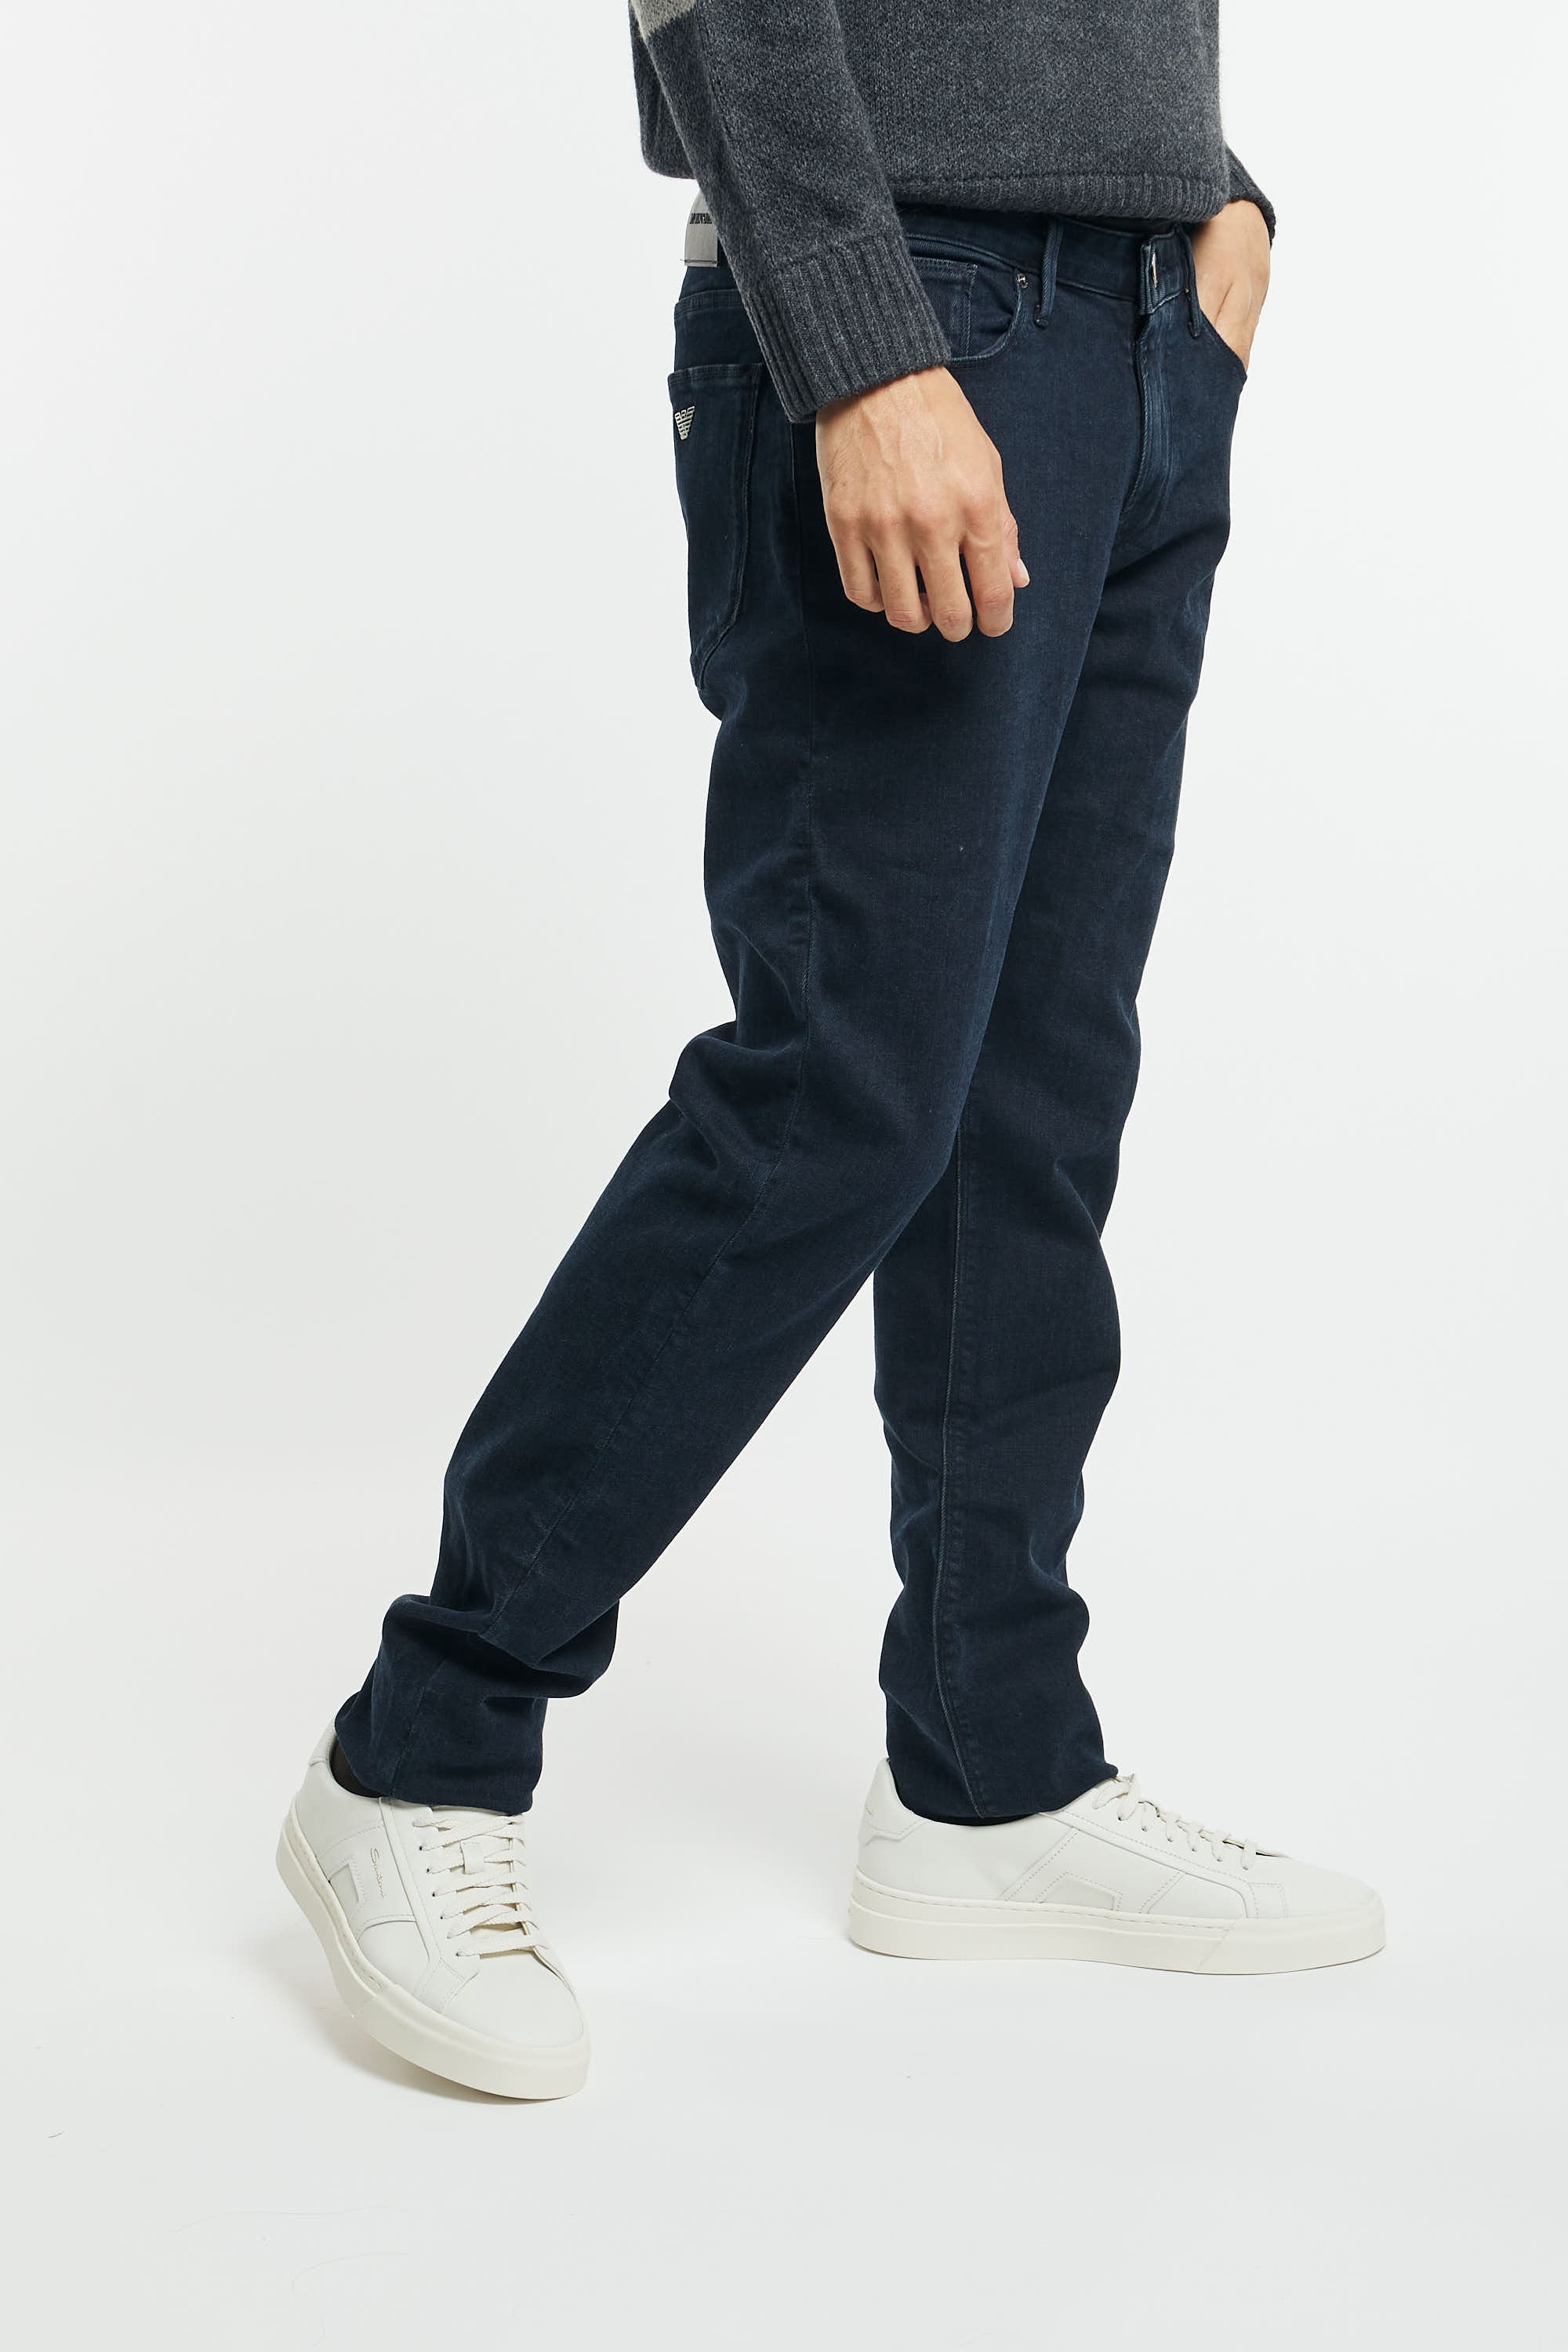 Emporio Armani Jeans J06 Slim Fit in Denim aus Stretch-Baumwolle Blau-3